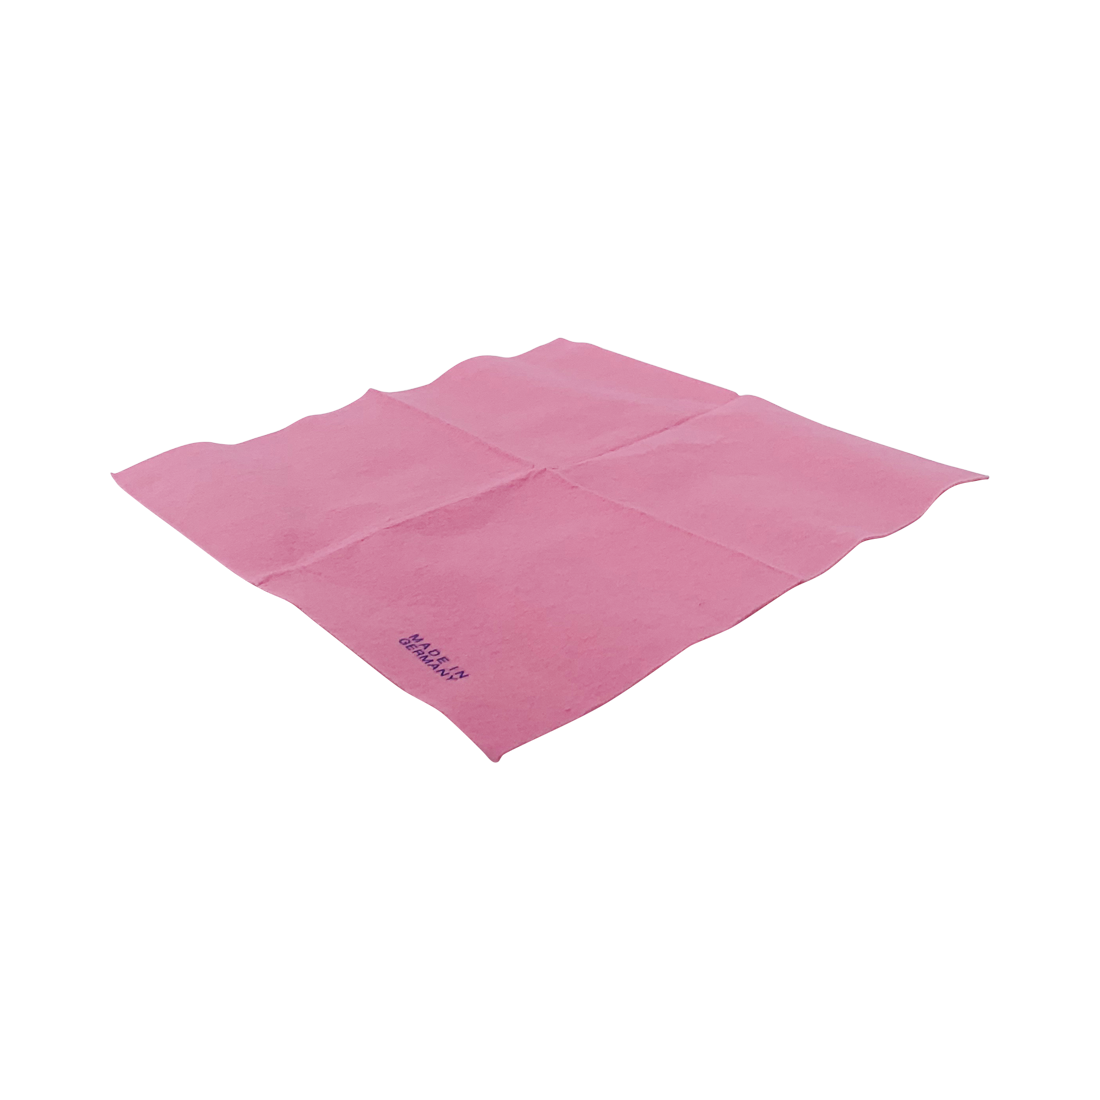 Vlies-Allzwecktuch ca. 110g/m², 300 Stück/Karton, rosa, 38 x 38 cm